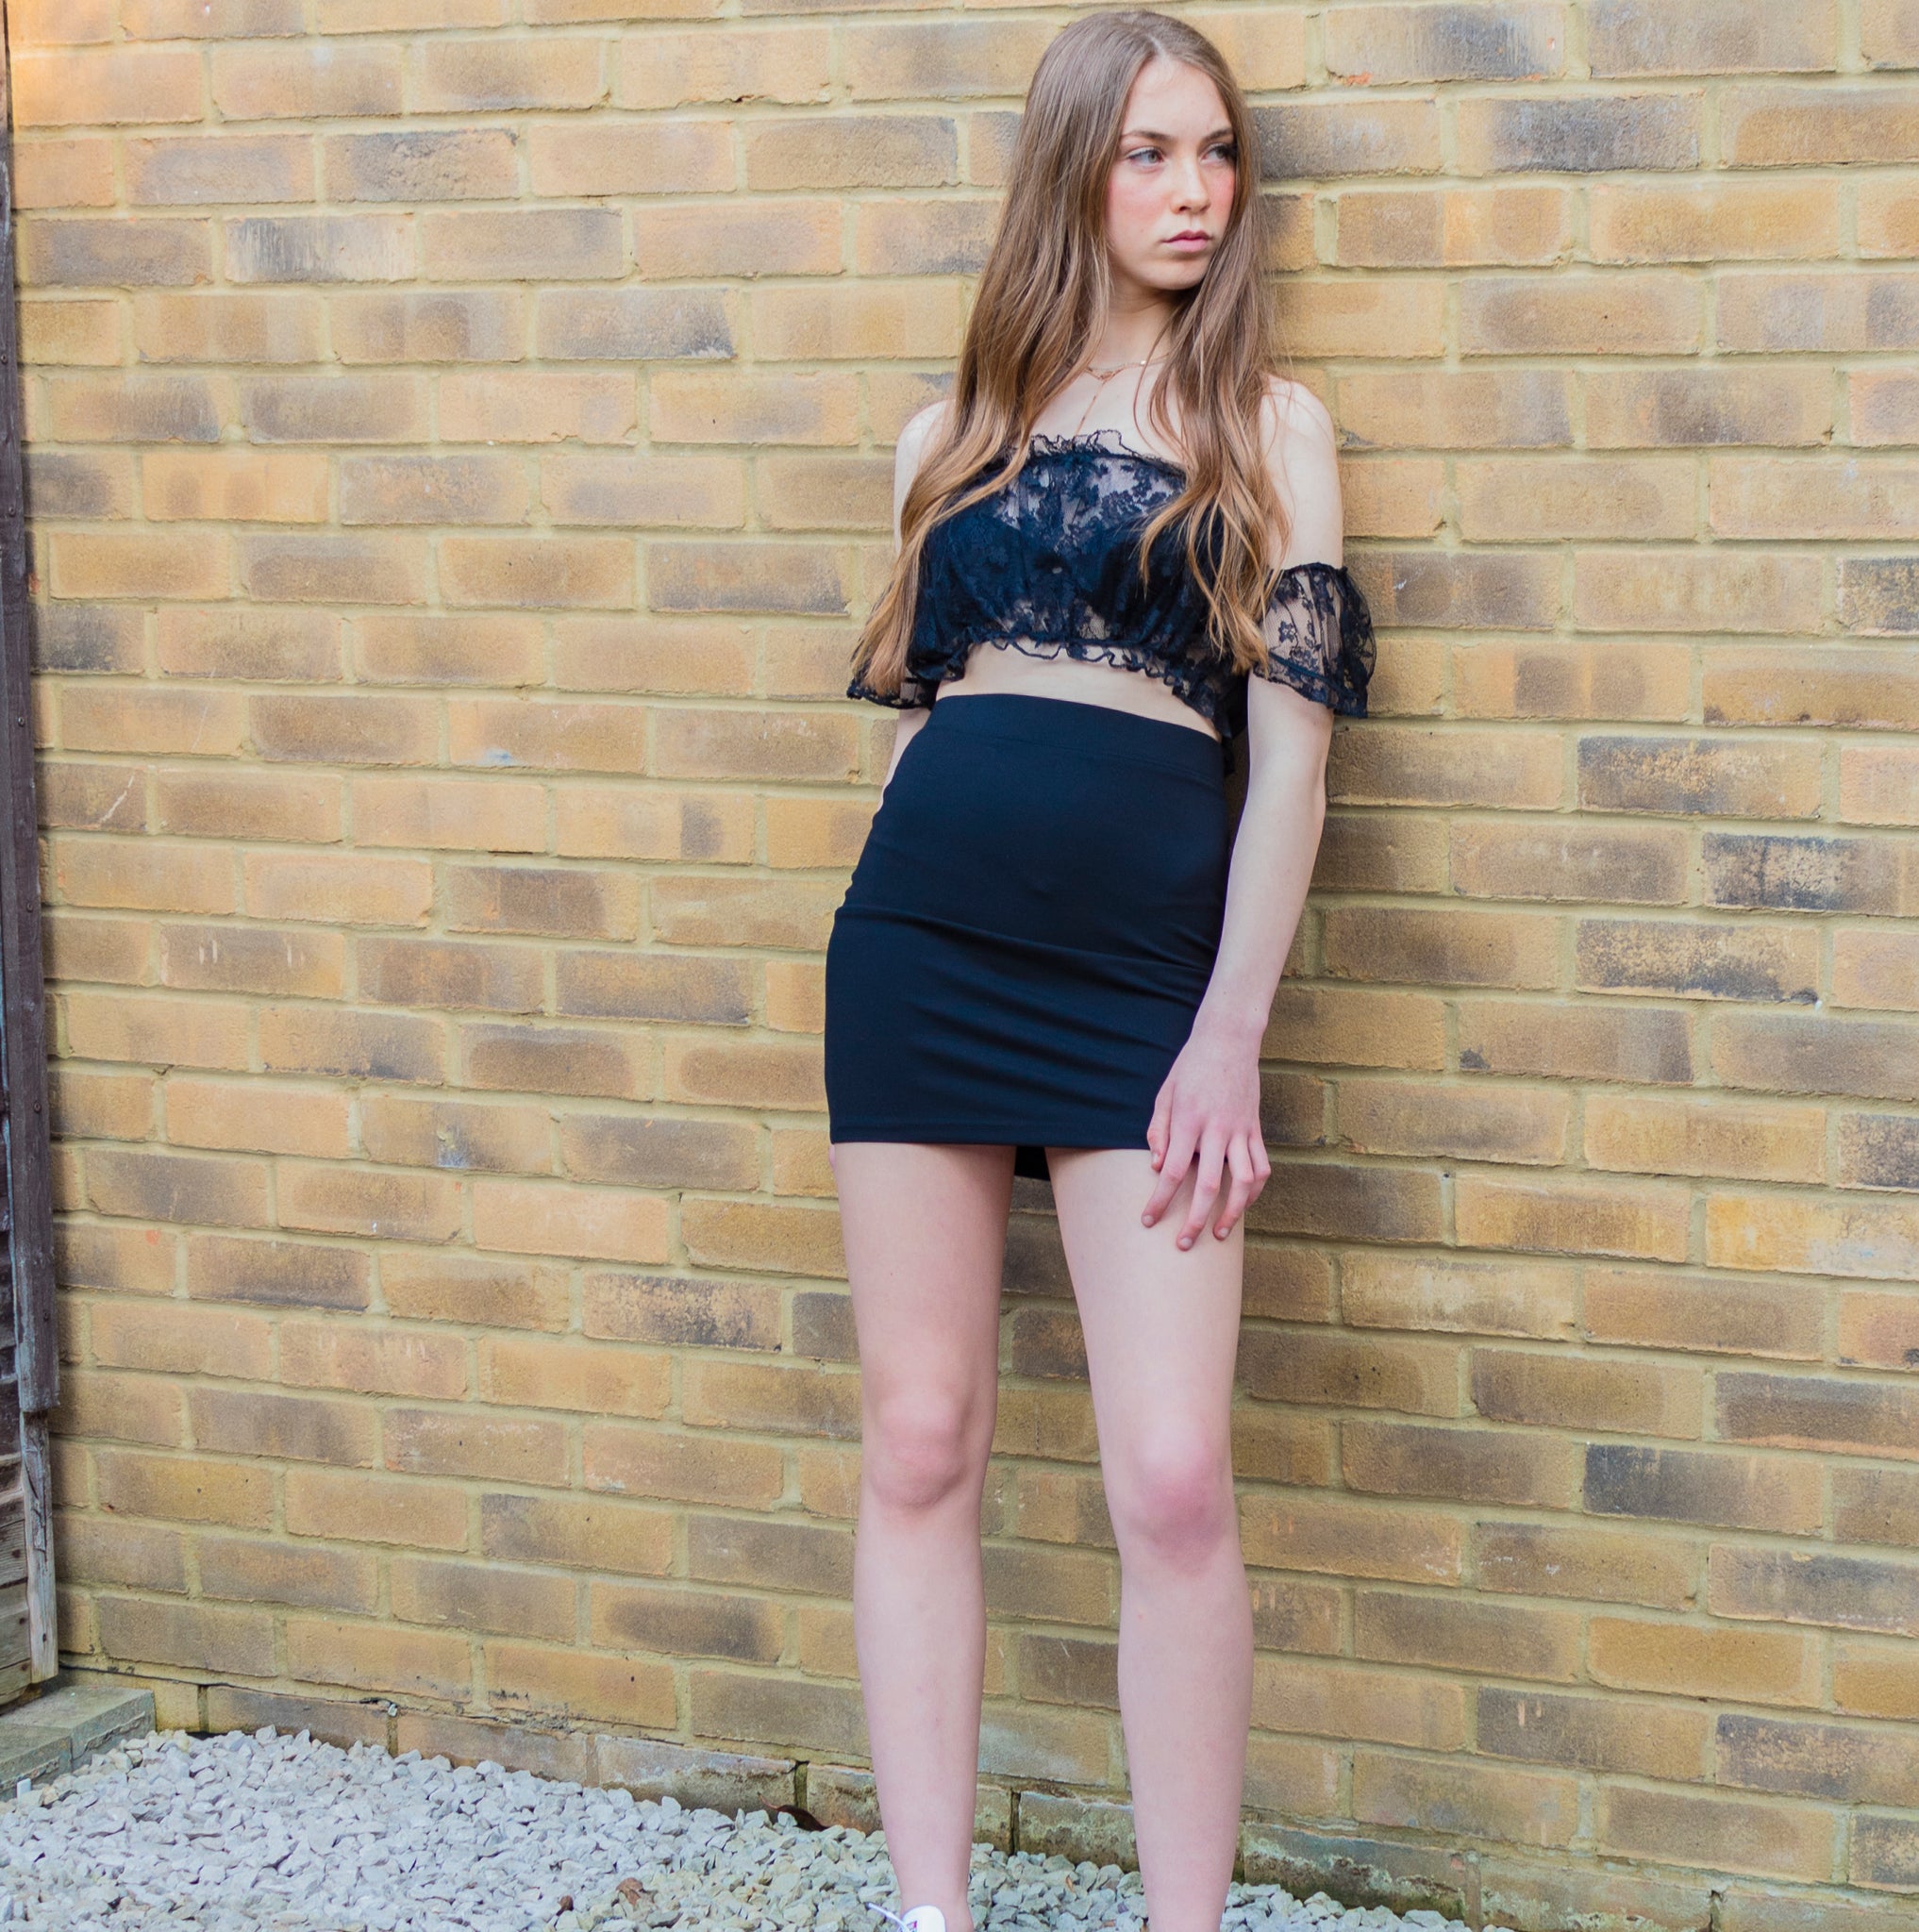 teen in tight skirt